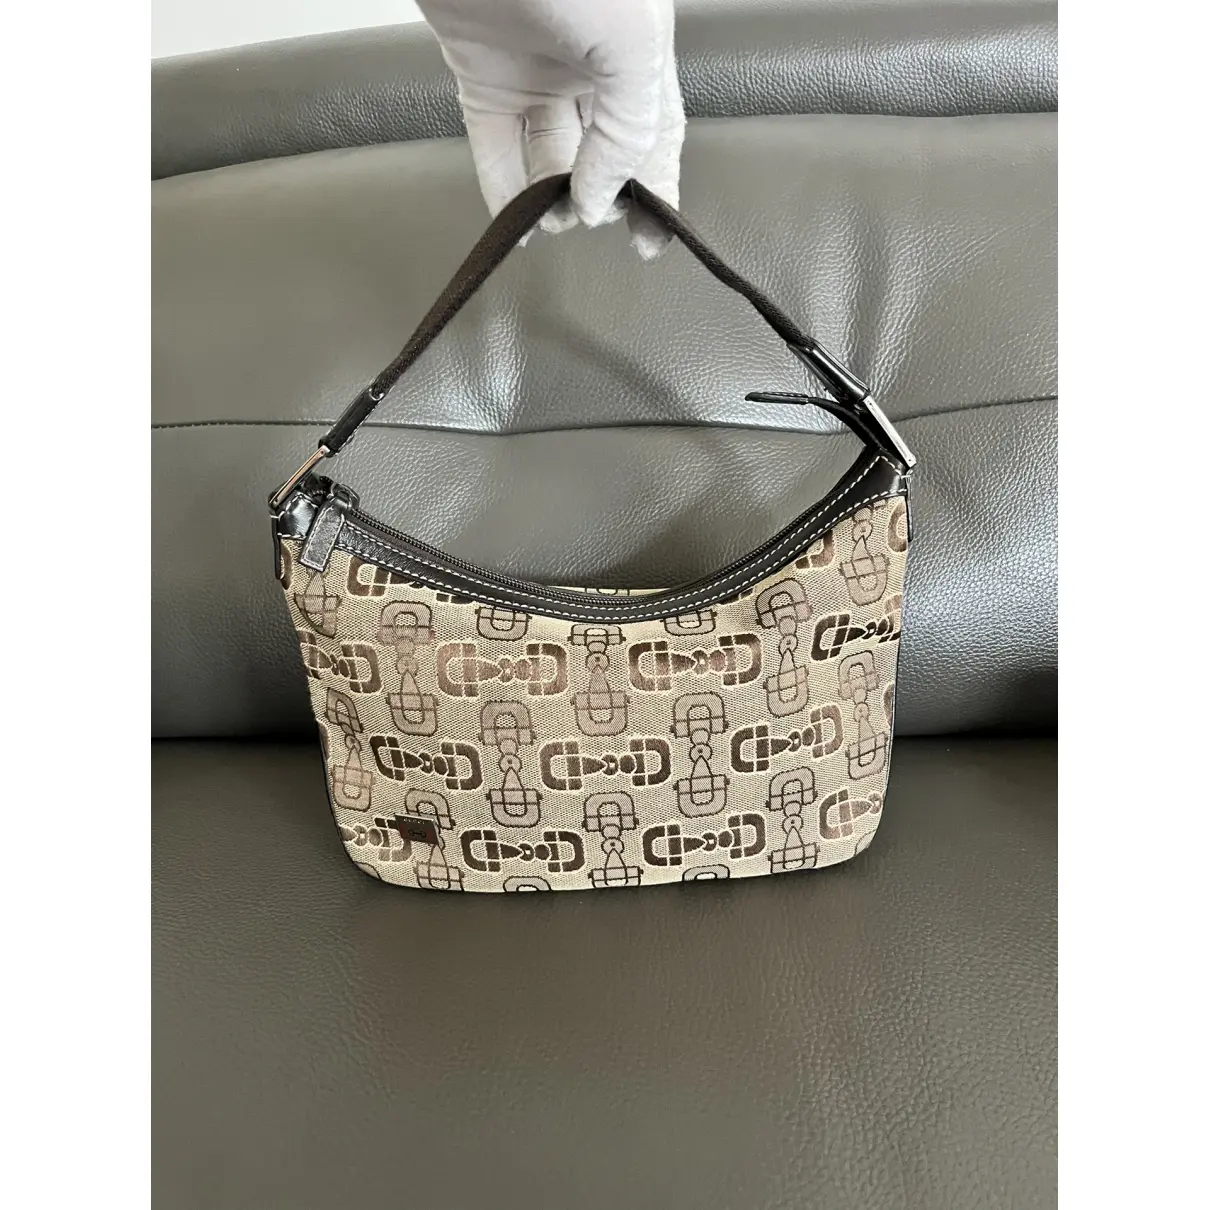 Buy Gucci Ophidia Hobo cloth handbag online